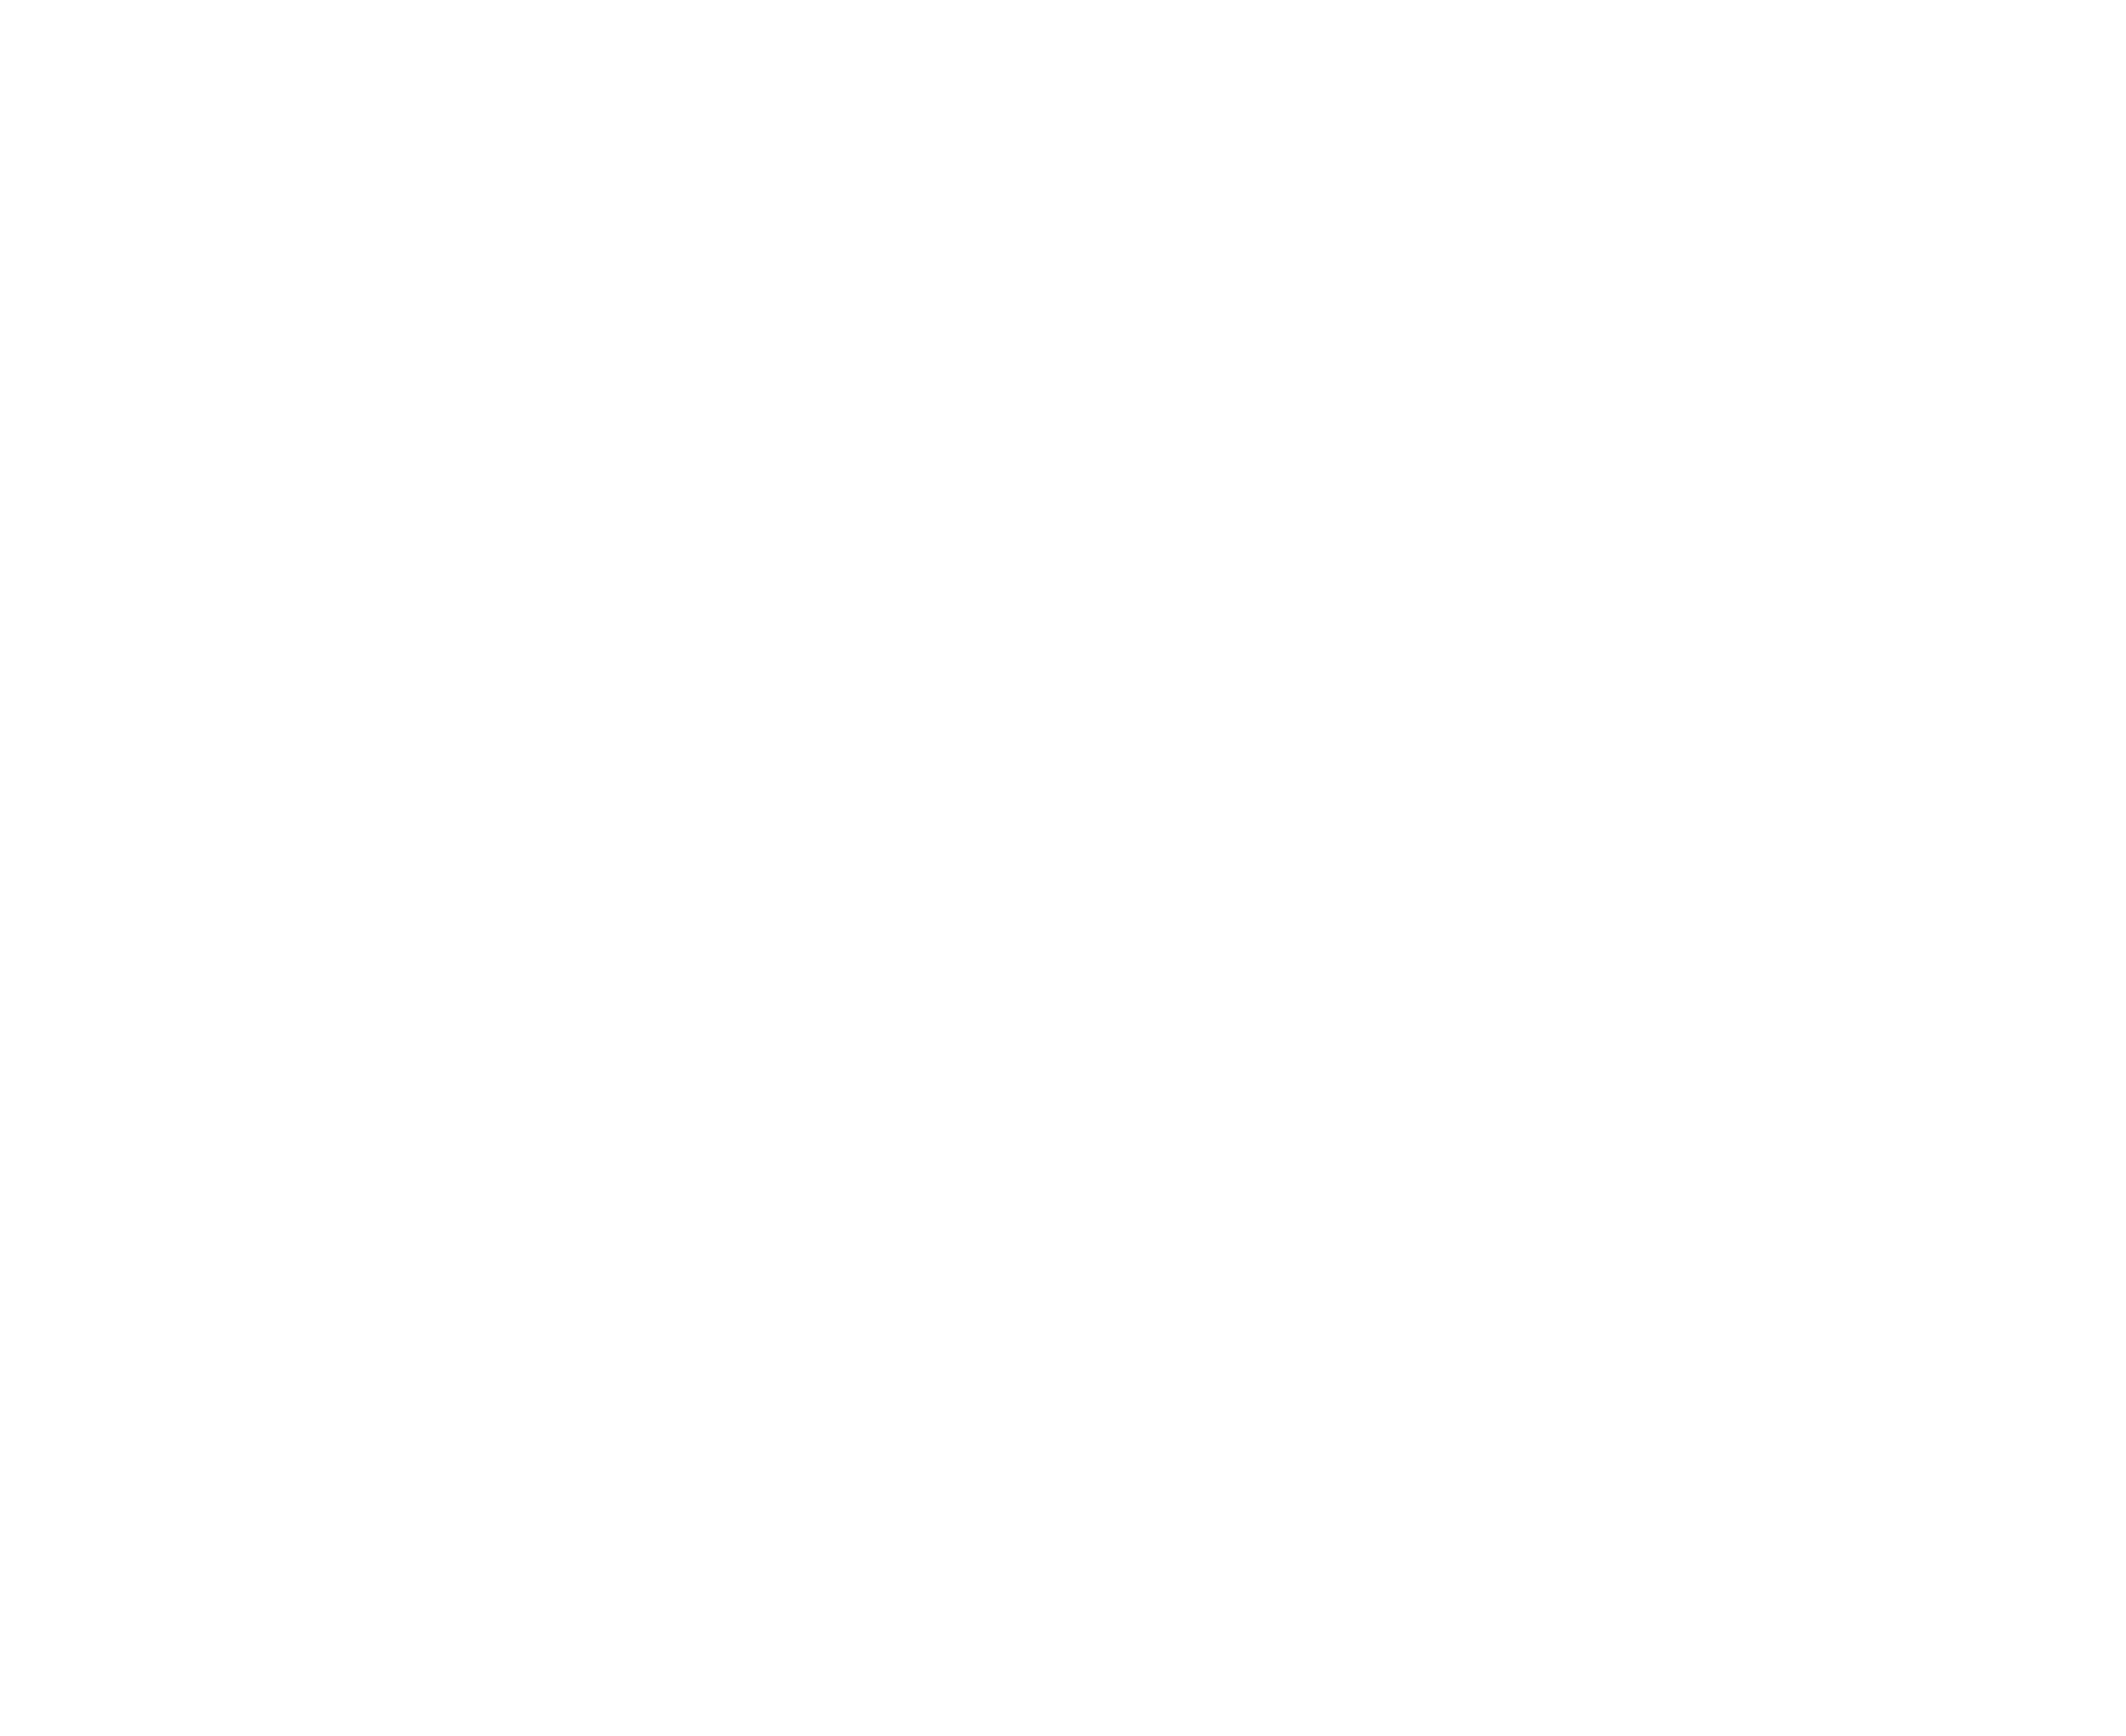 Ex Network Capital